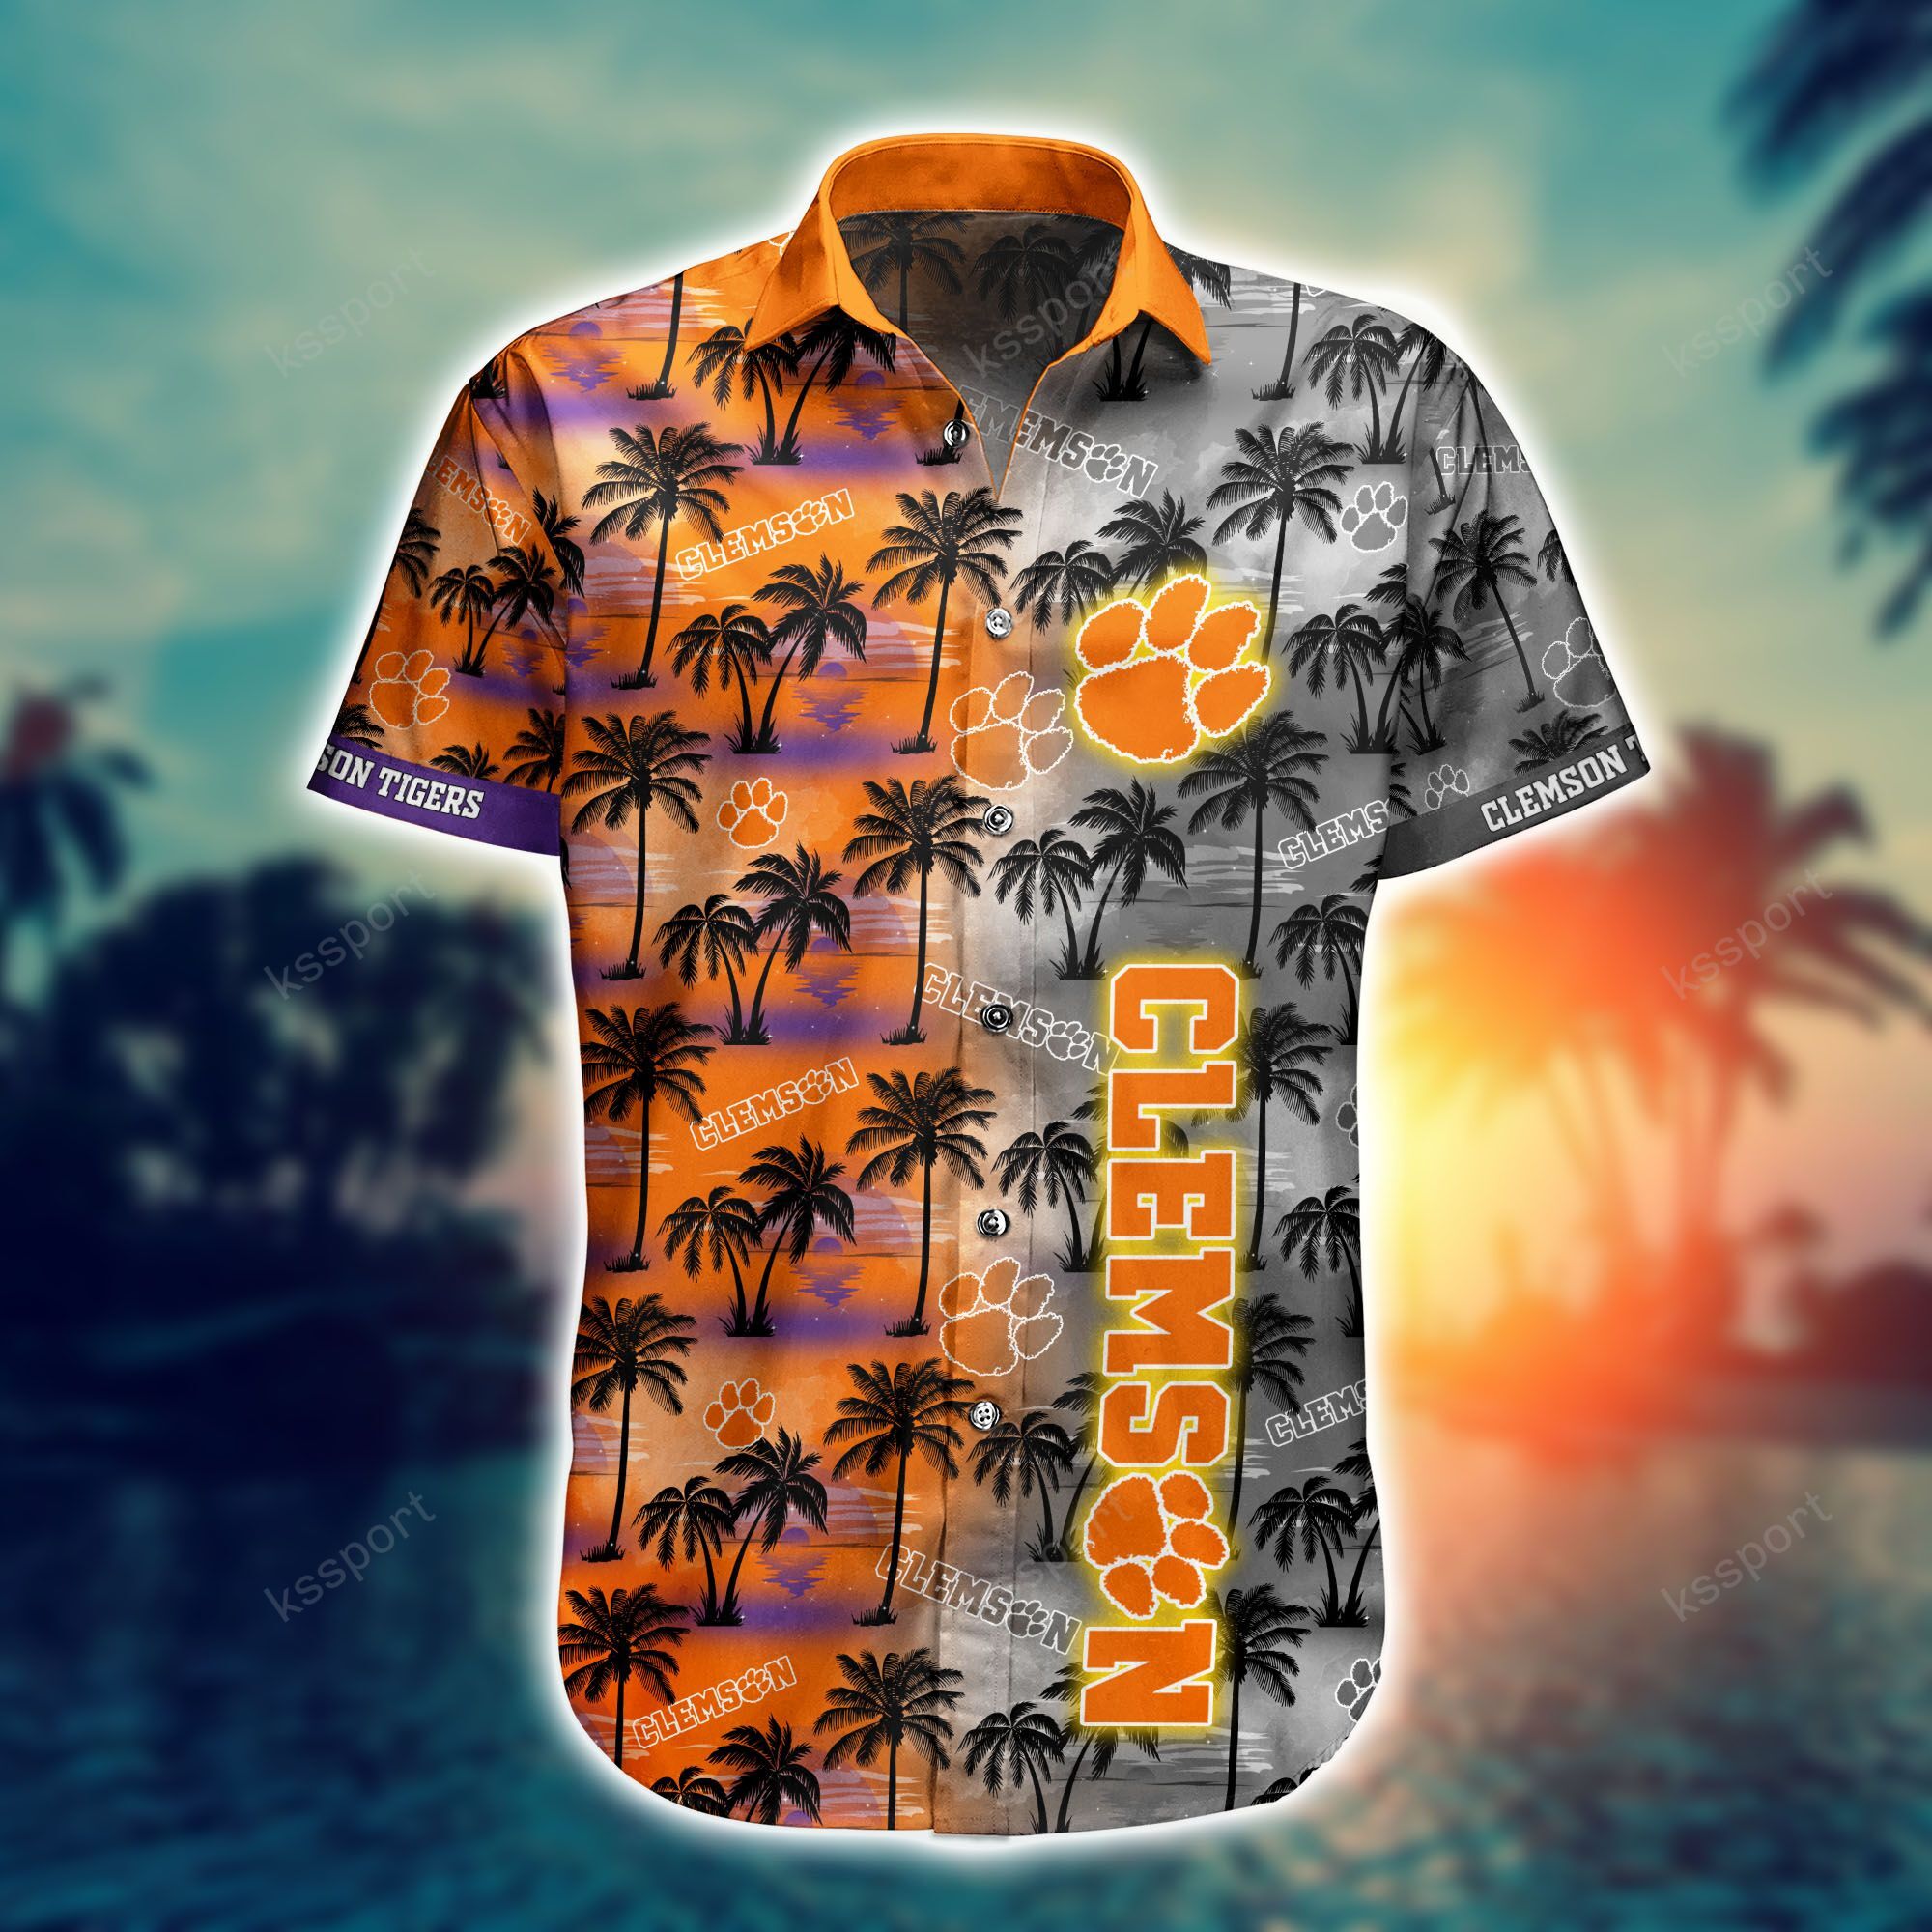 Hawaiian shirt and shorts is a great way to look stylish at a beach party 6